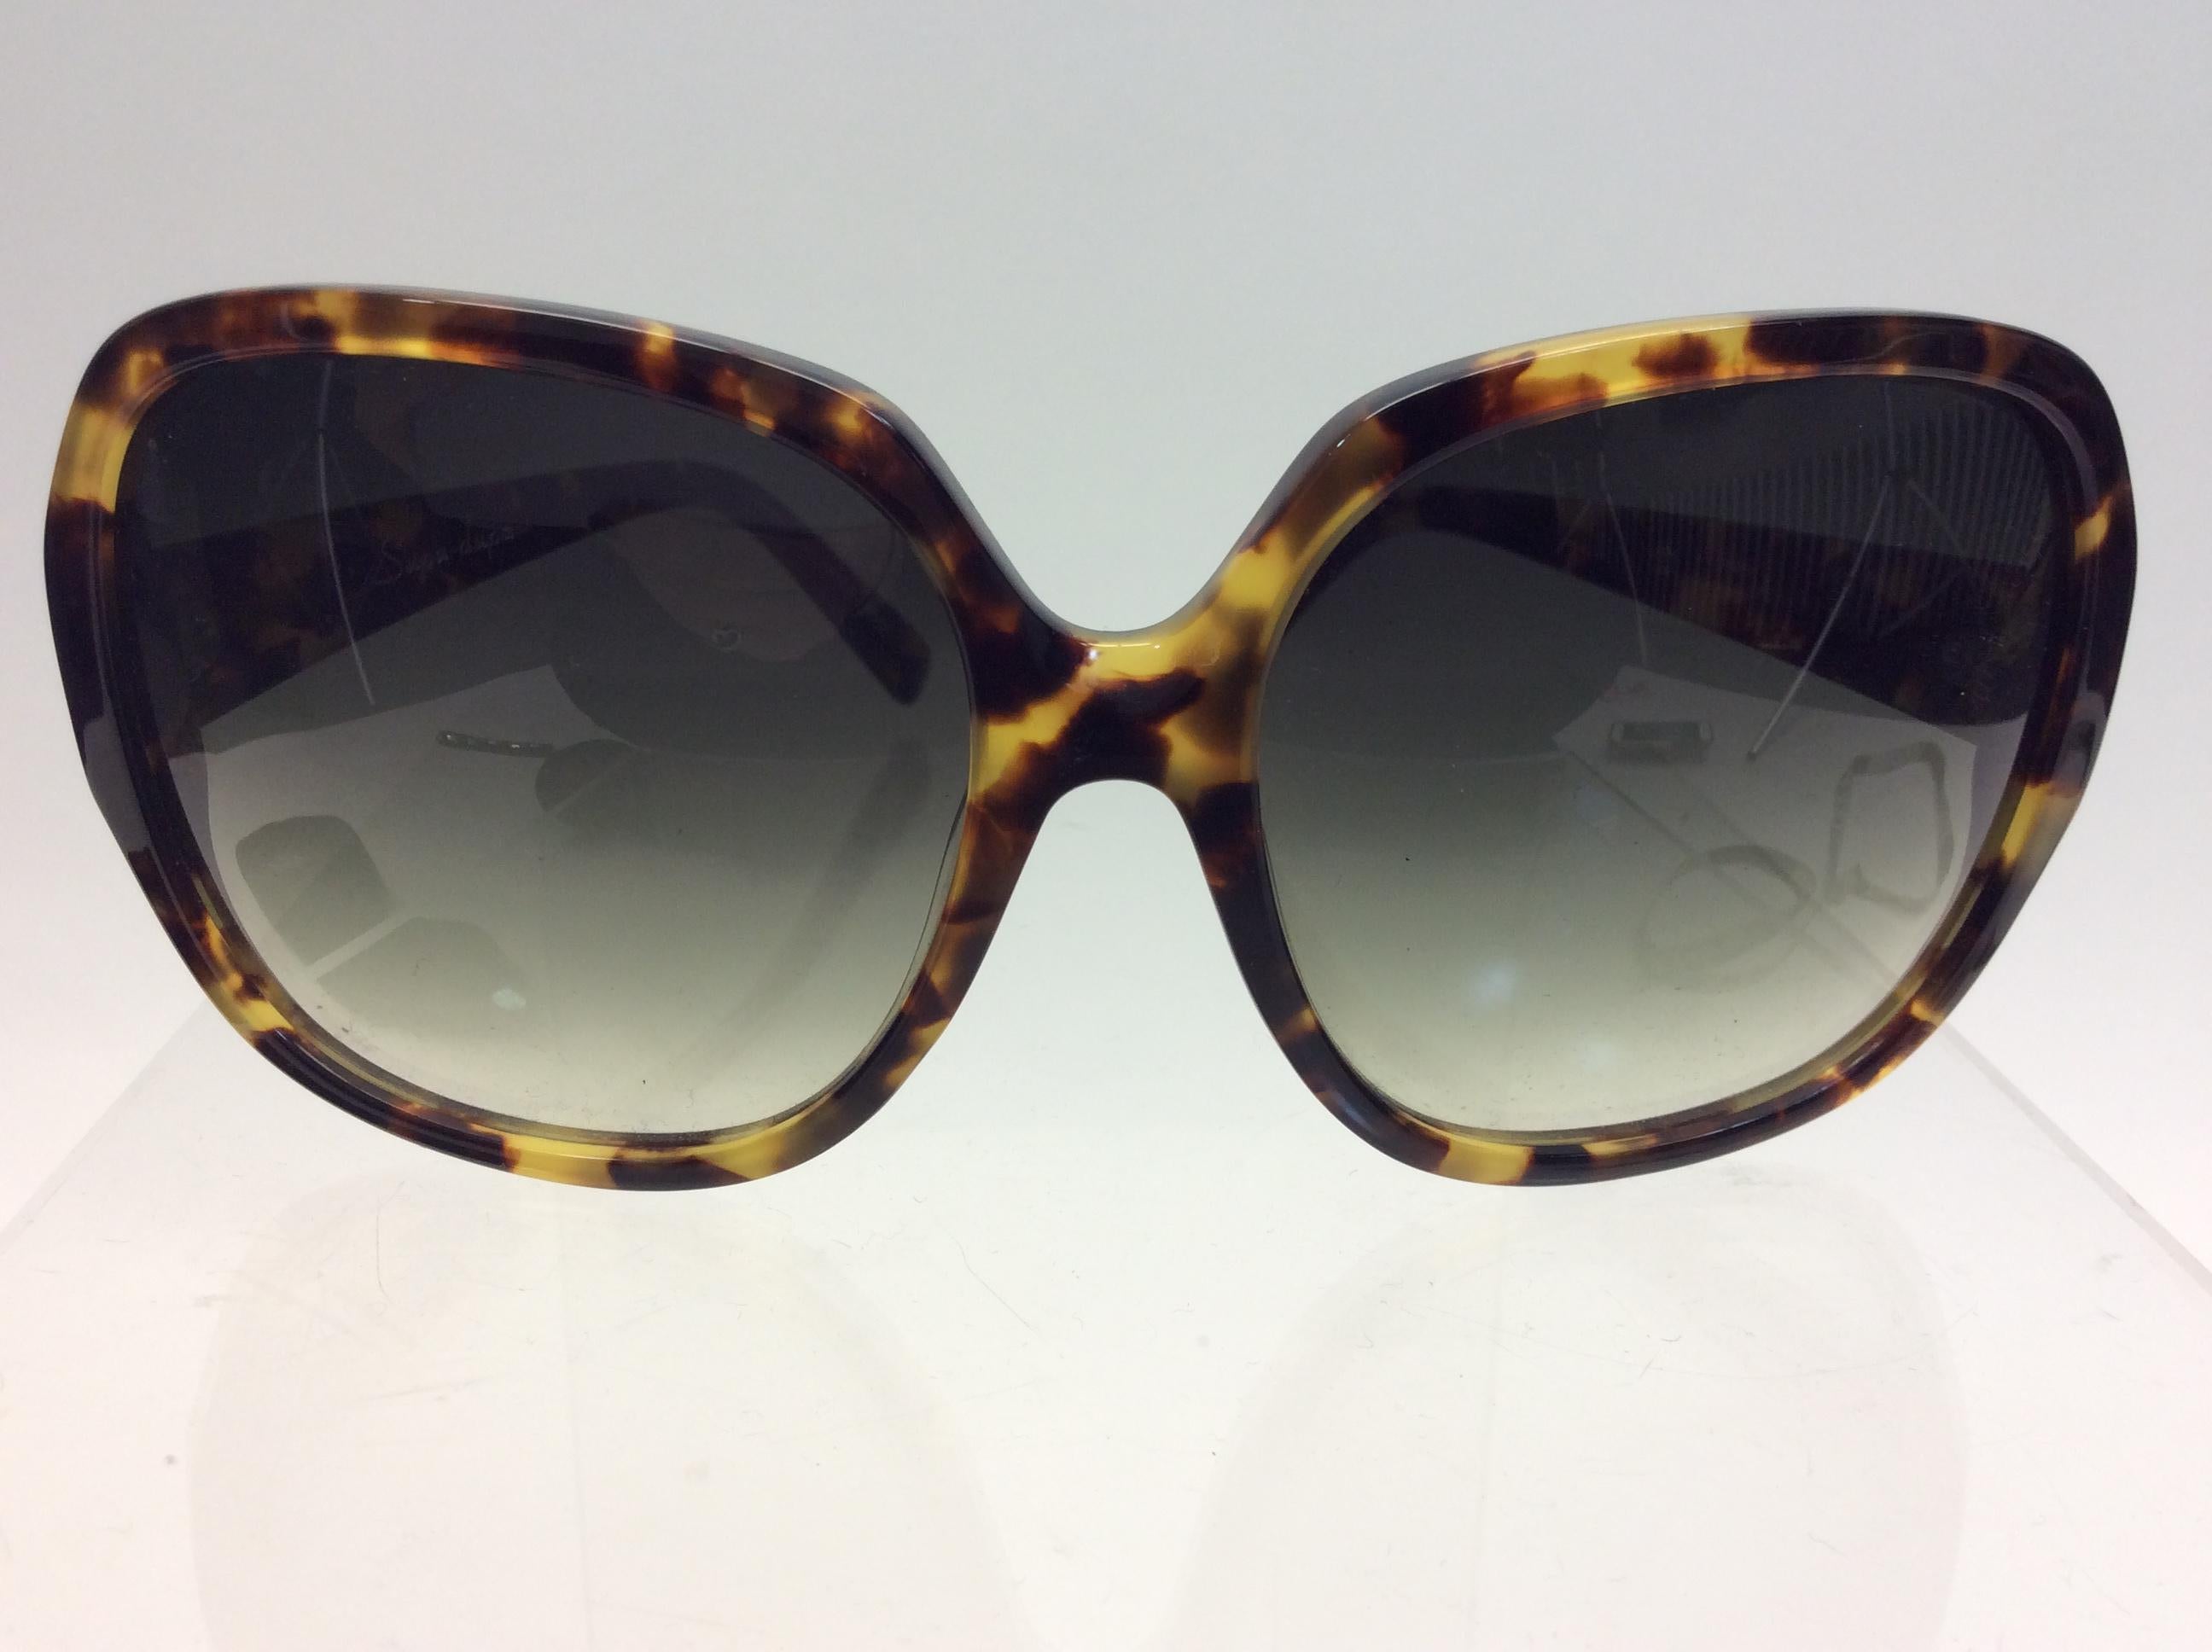 Dita Tortoise Sunglasses
$199
Made in Japan
5.5